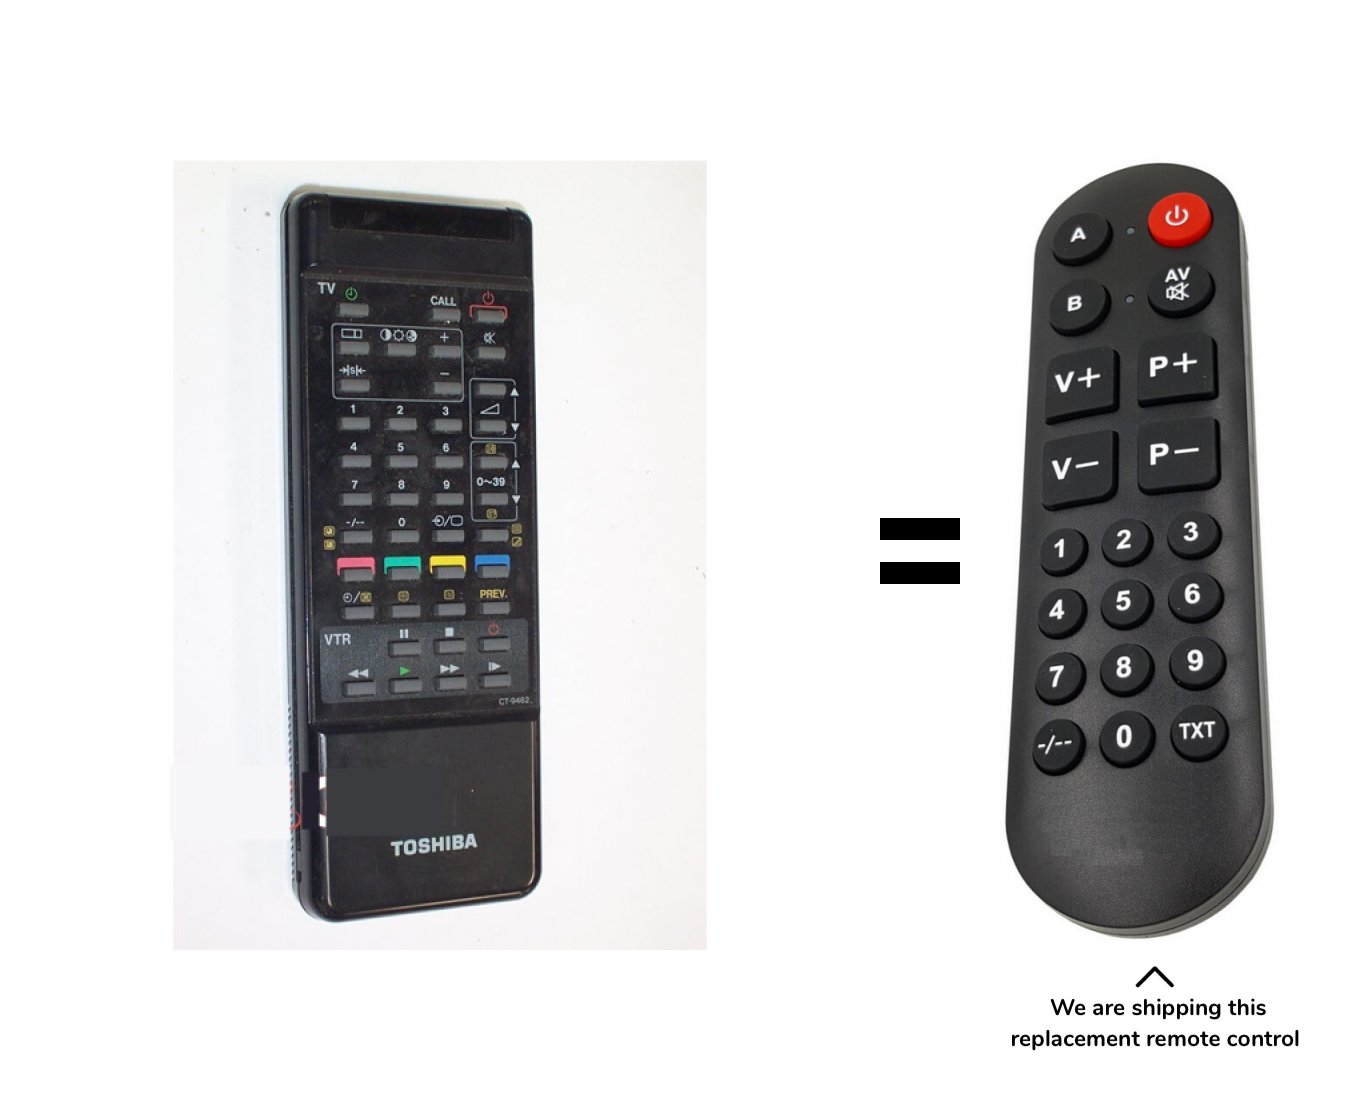 Toshiba CT-9476 remote control for seniors